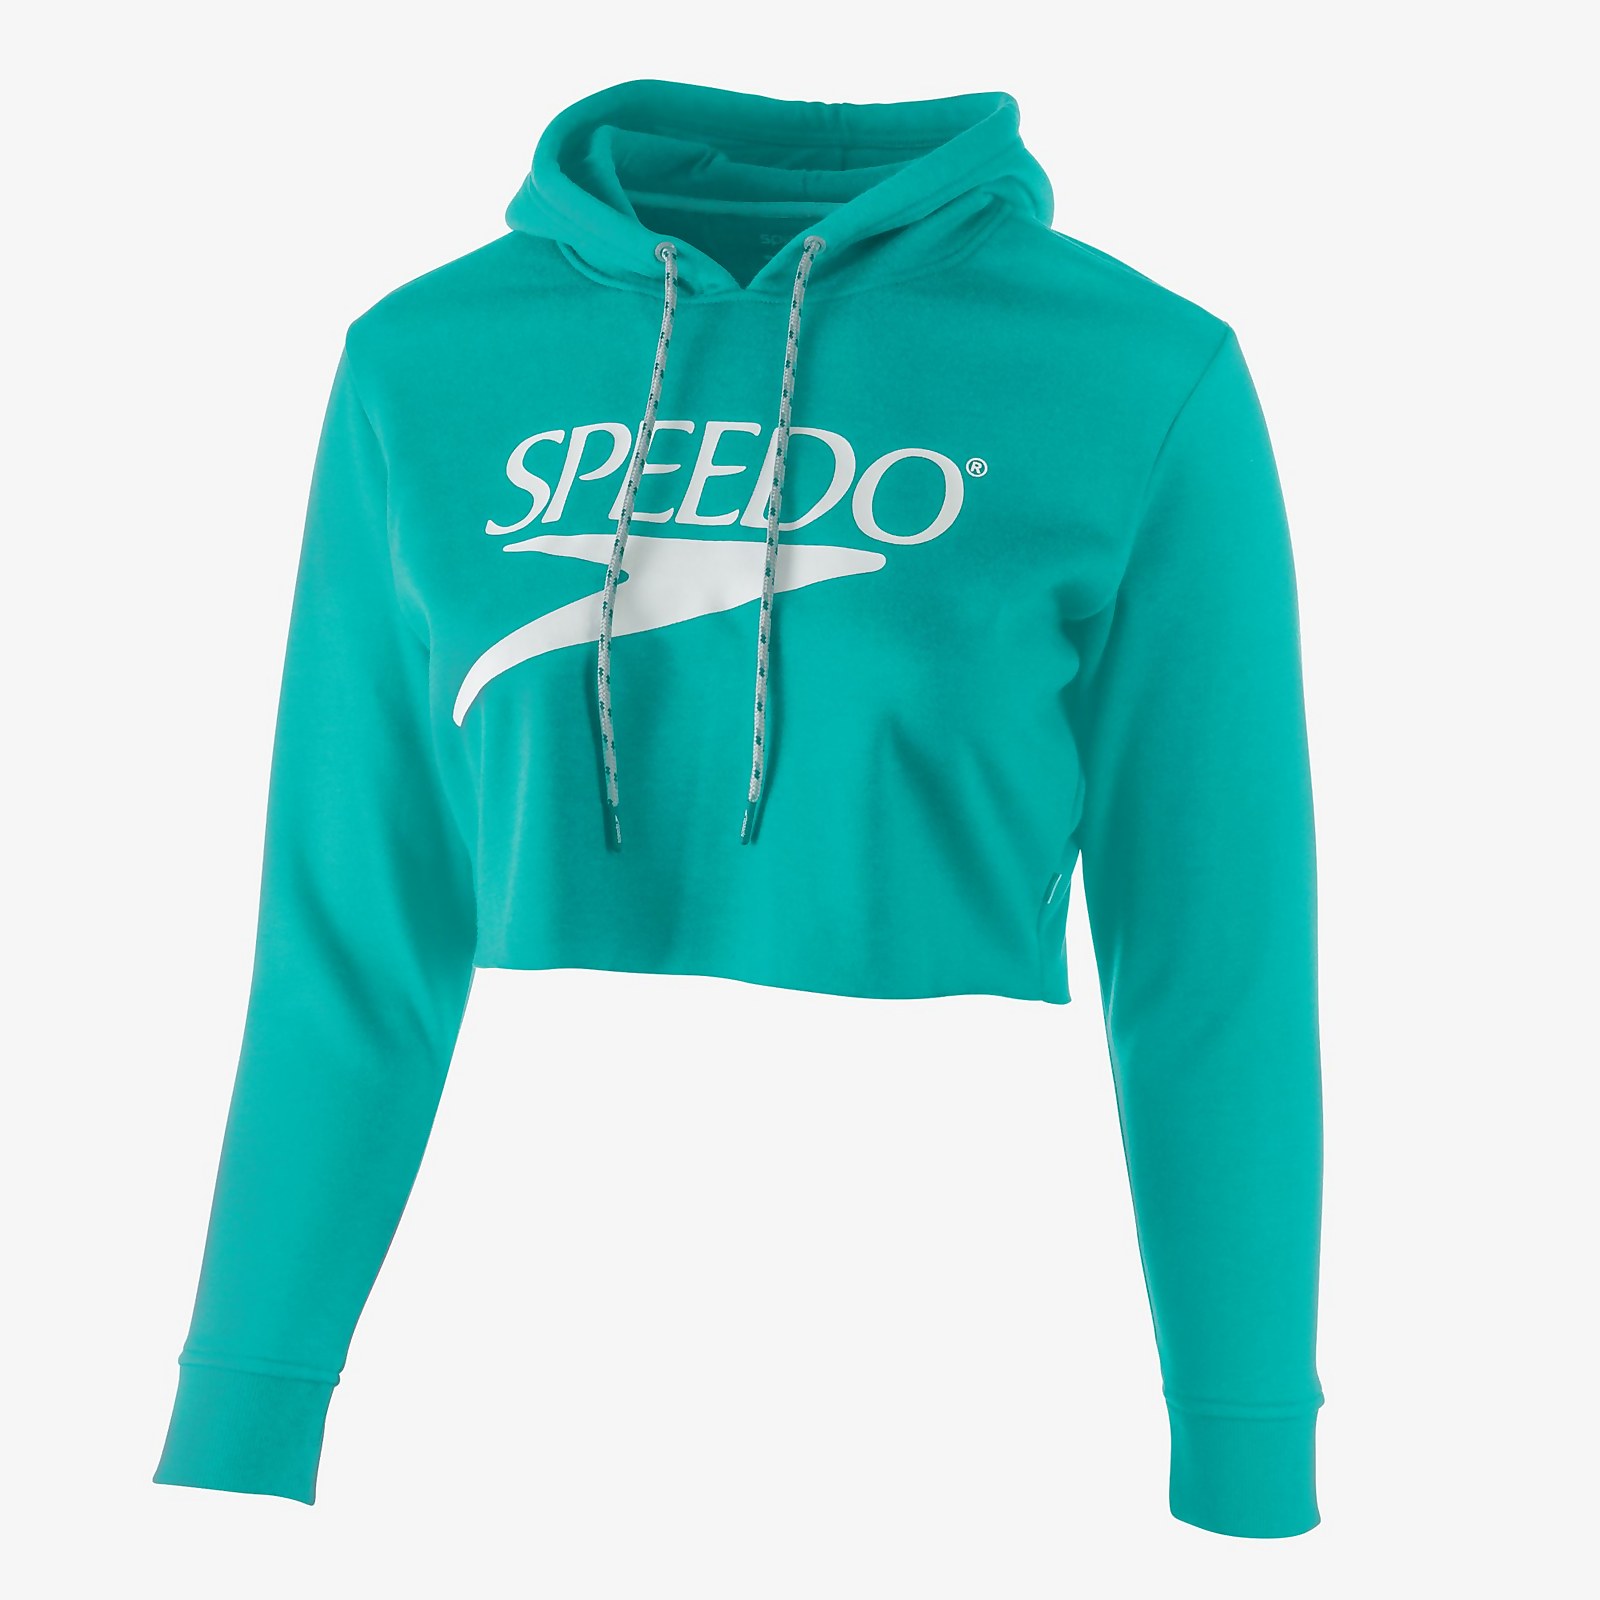 Speedo  Vintage Logo Cropped Hoodie - S    : Aqua